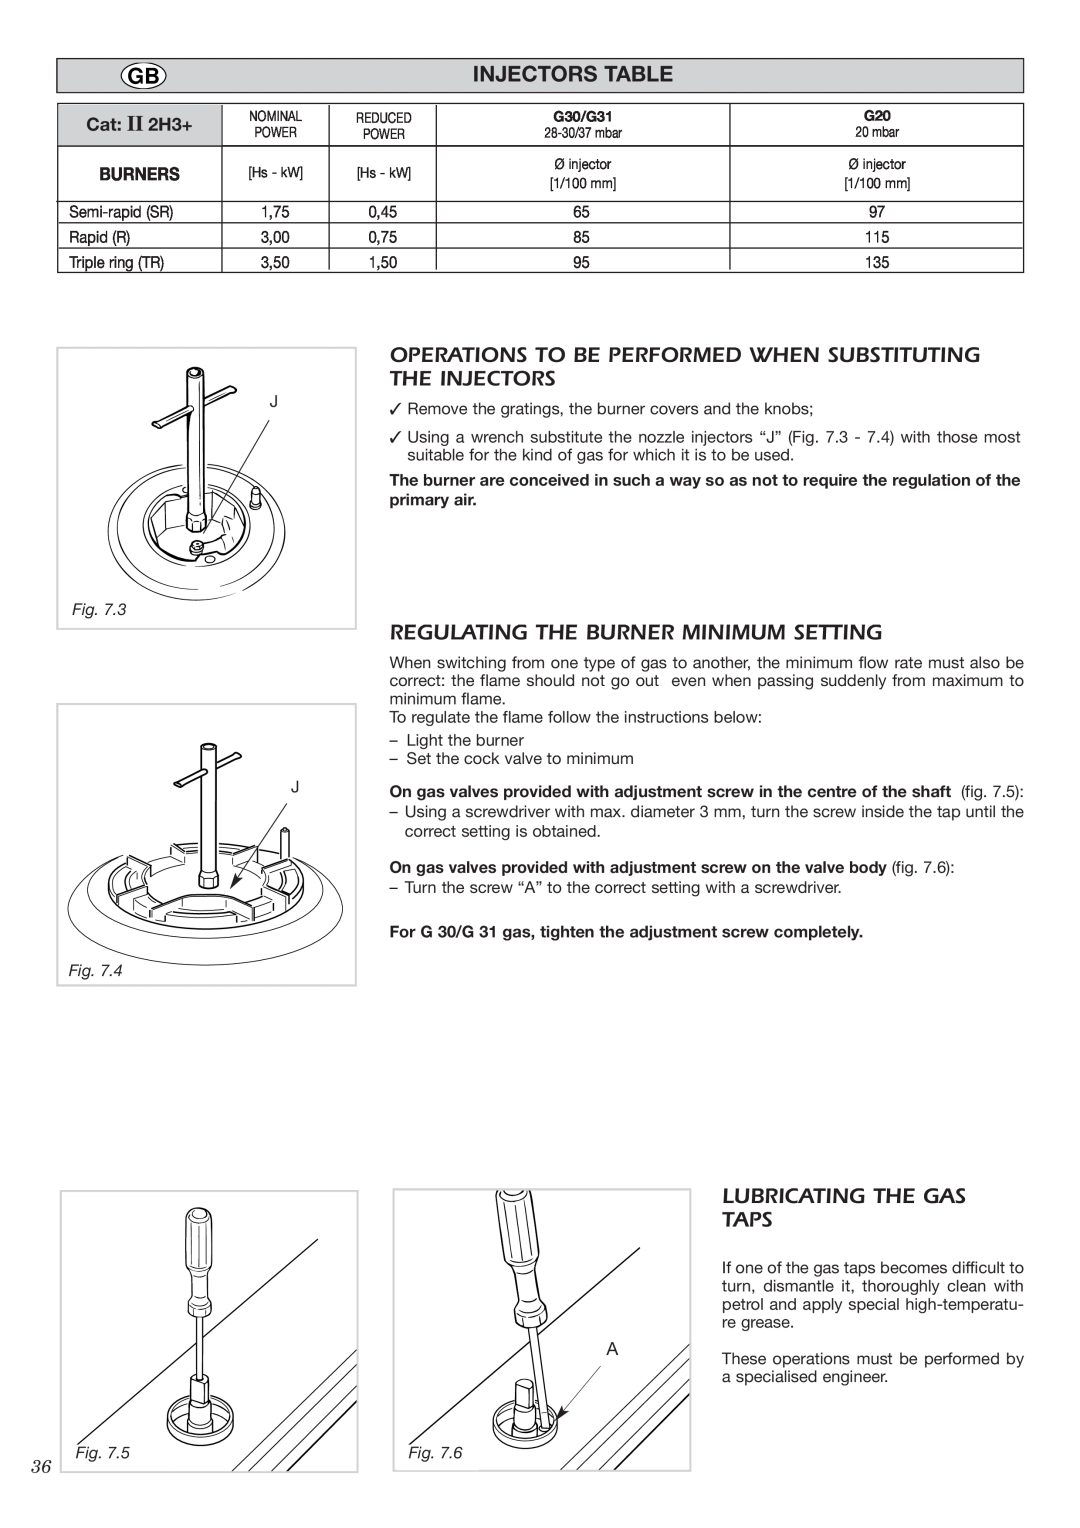 CDA HCC360 manual Injectors Table, Regulating The Burner Minimum Setting, Lubricating The Gas Taps, Cat II 2H3+ 